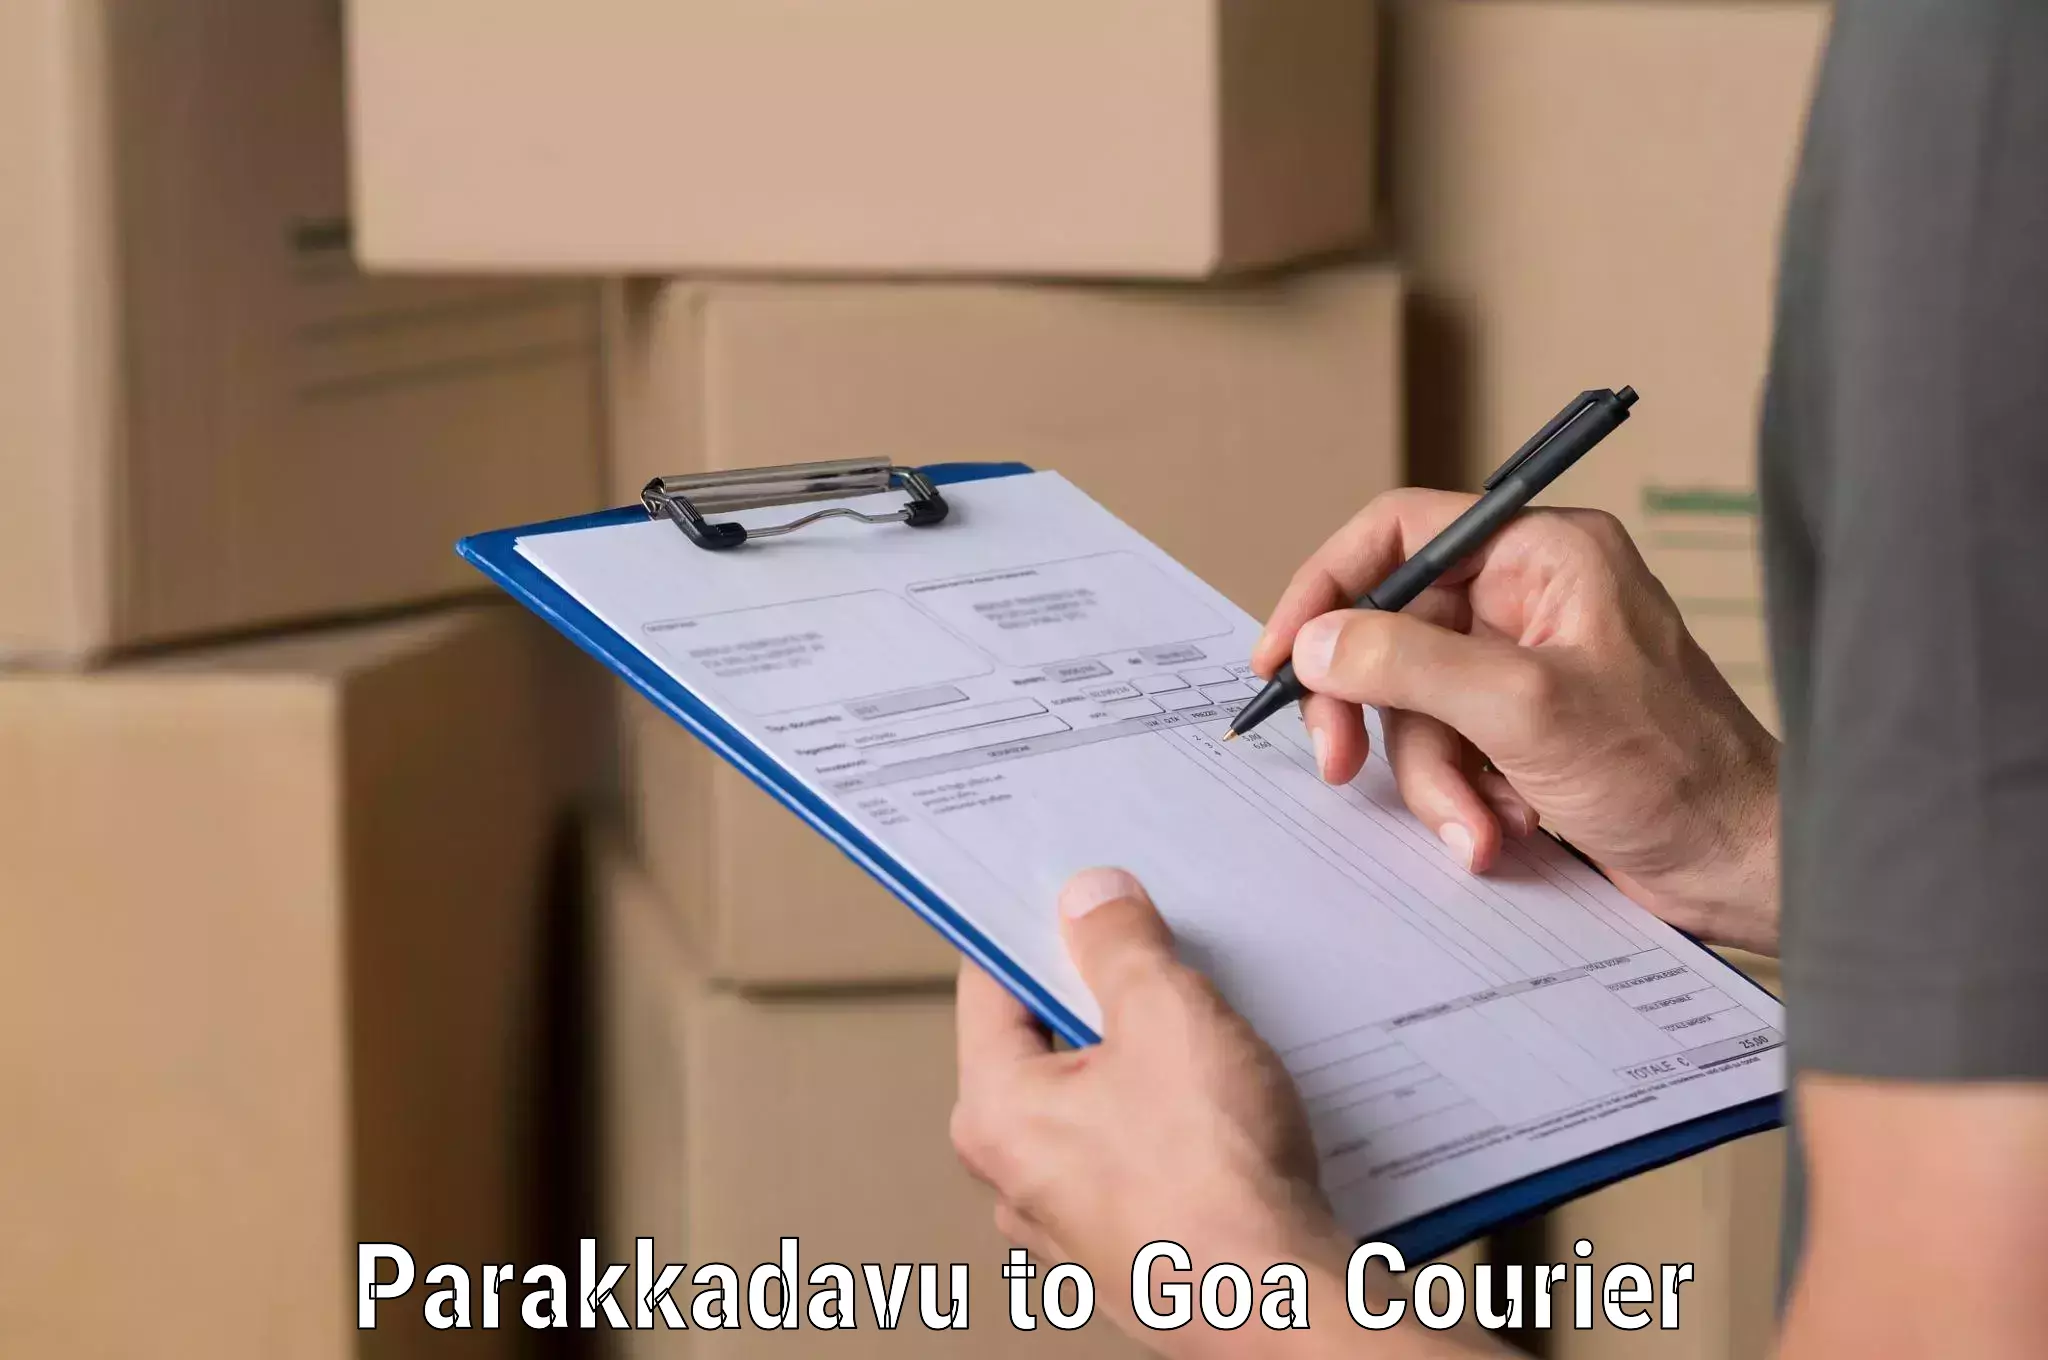 State-of-the-art courier technology Parakkadavu to Goa